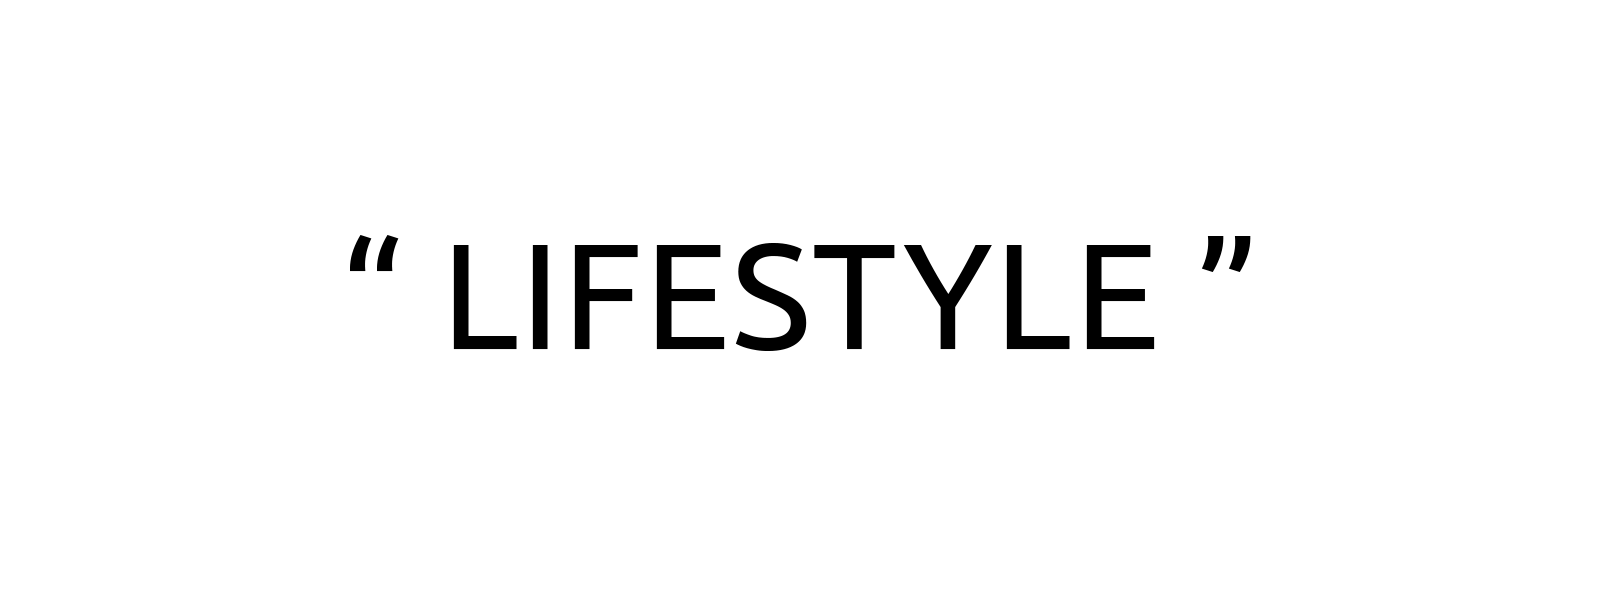 LIFESTYLE-1